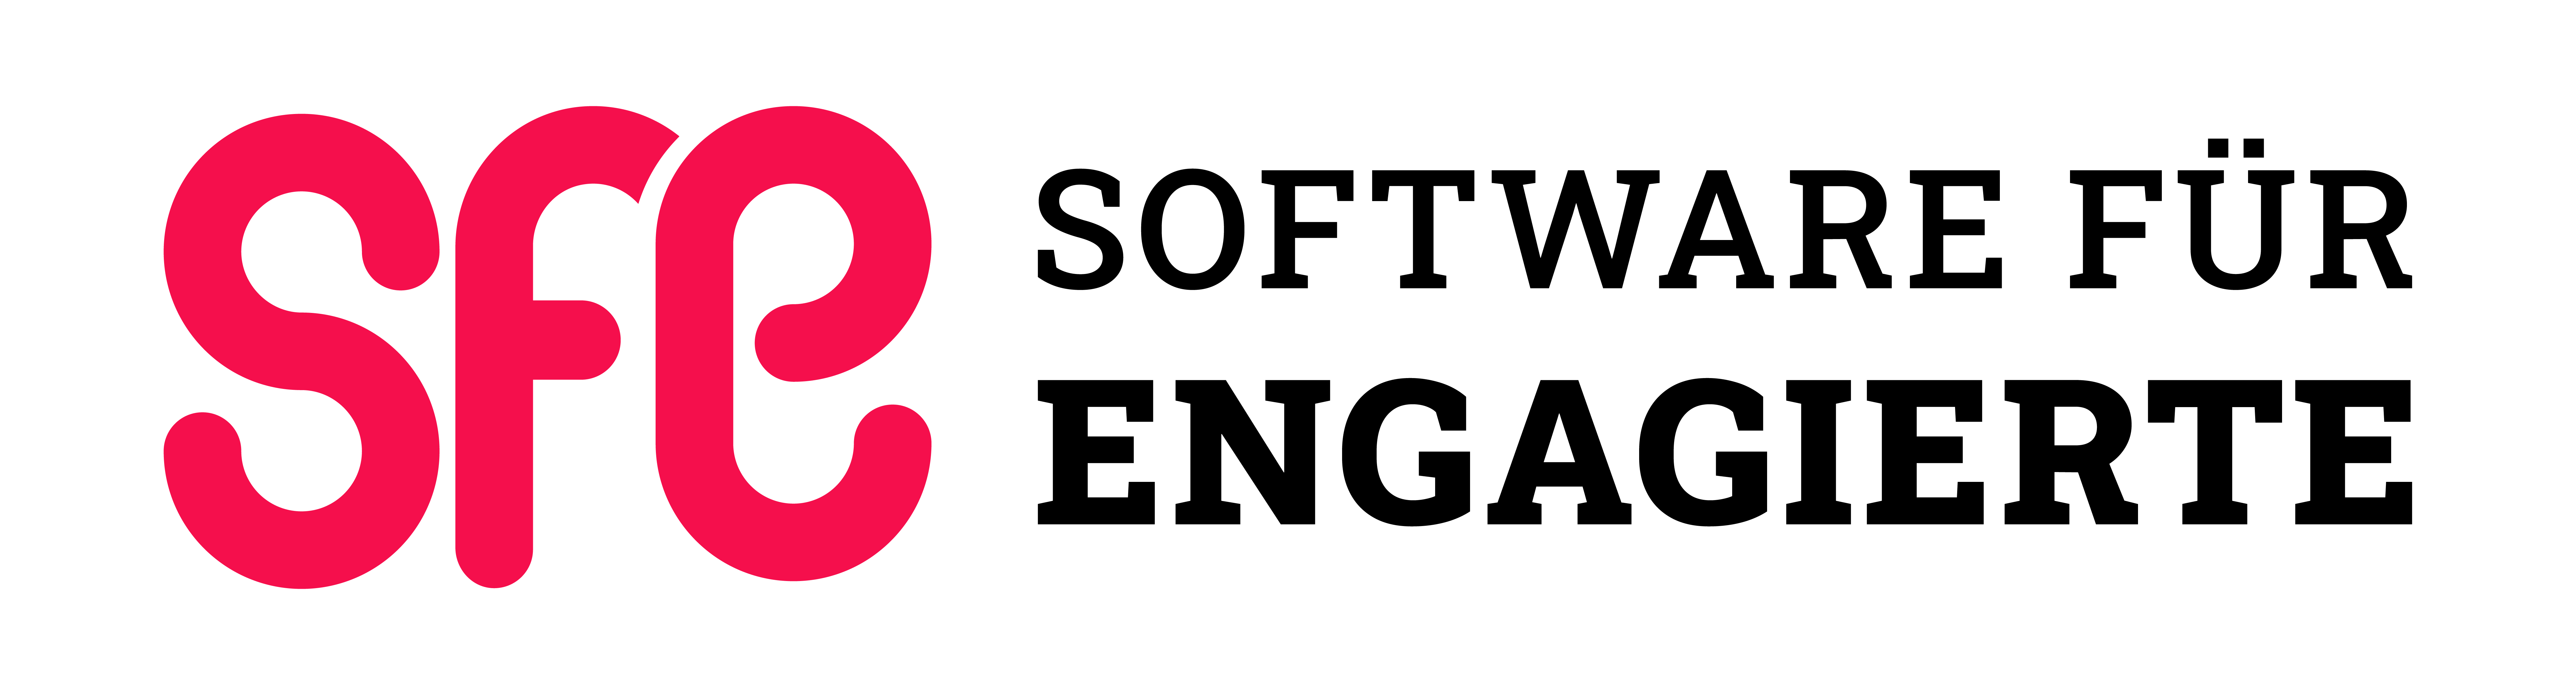 Logo for Software fur Engagierte partner